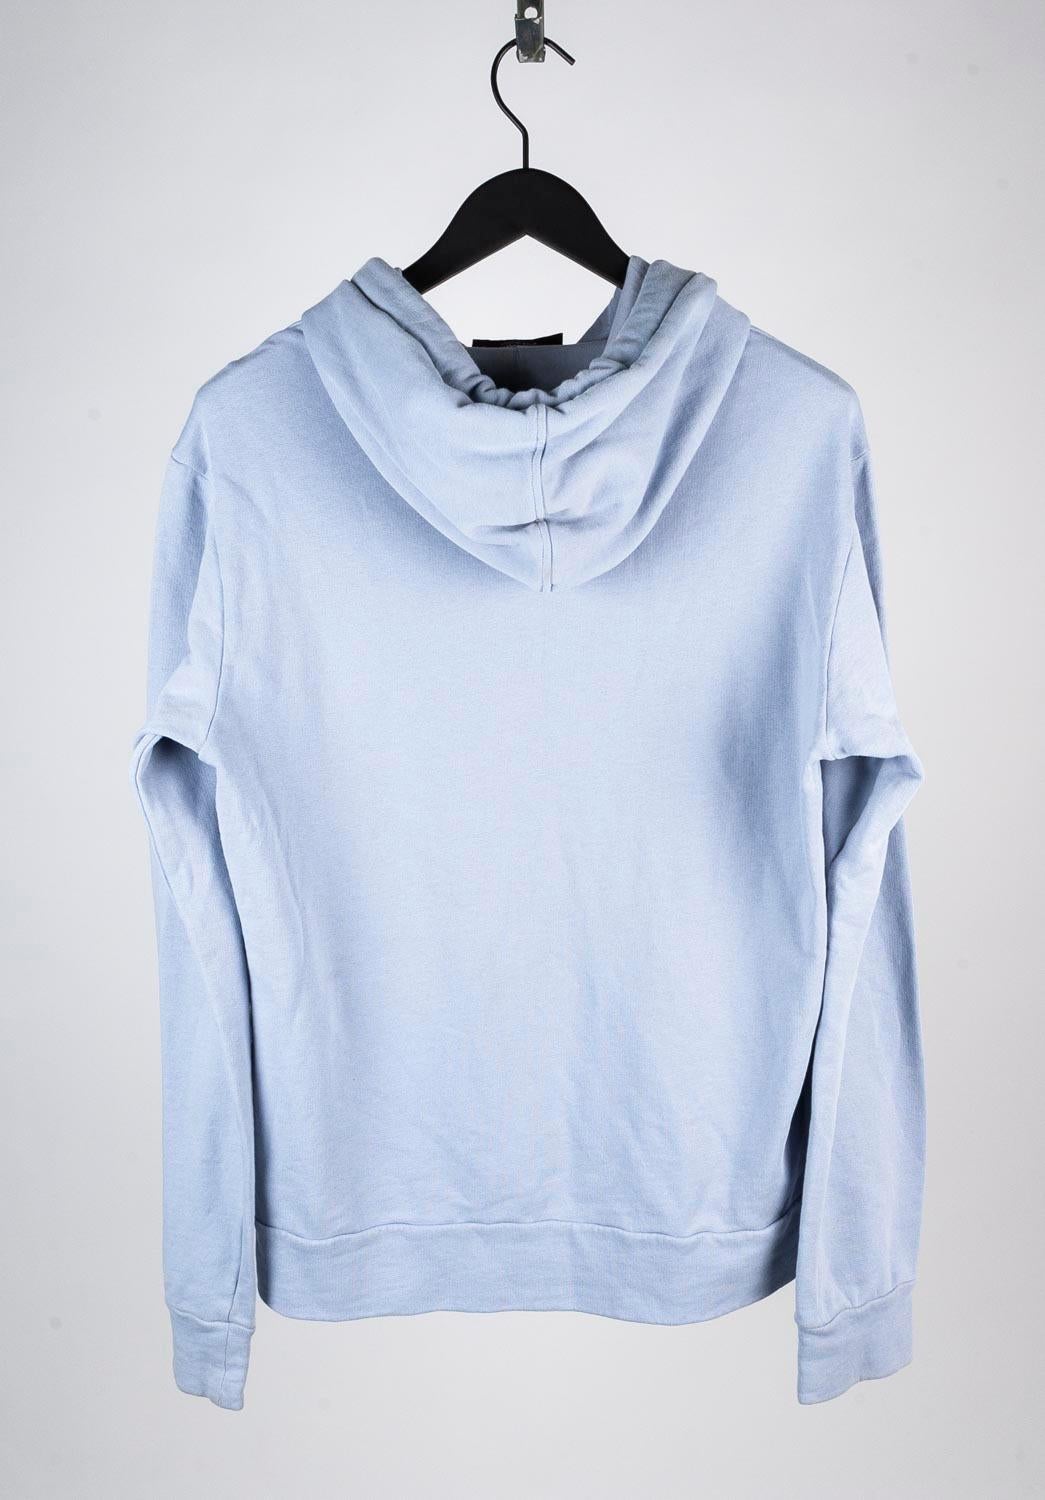 Dolce&Gabbana Marlon Brando Hoodie Sweatshirt Men Jumper Size 48IT, S541 For Sale 1